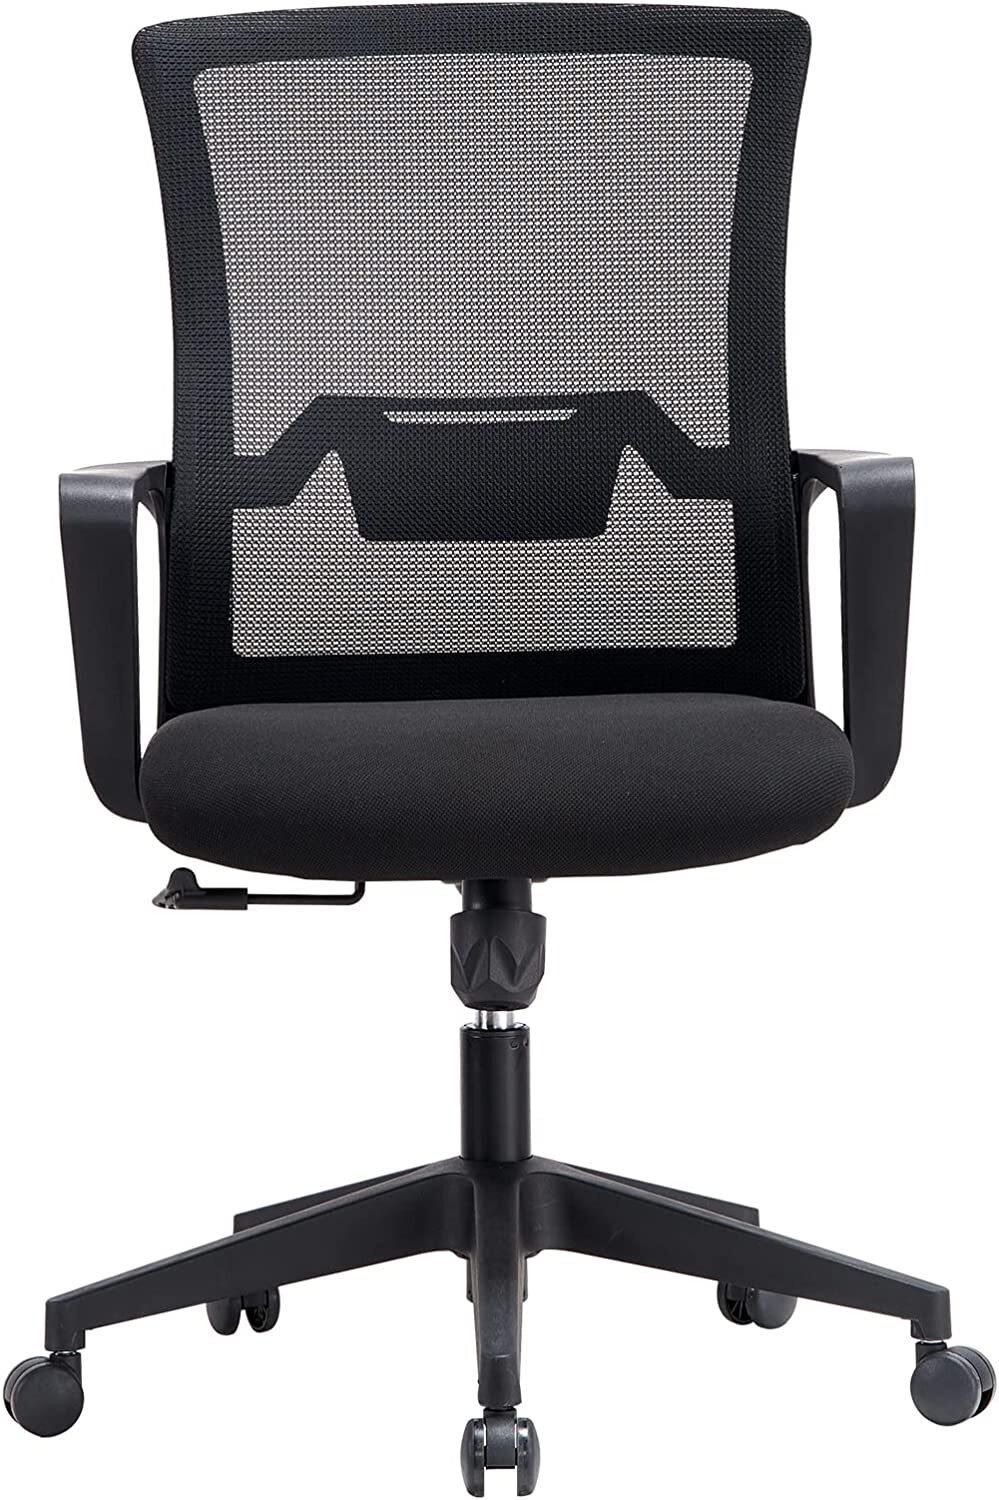 Karnak Mesh Executive Office Home Chair 360 Swivel Ergonomic Adjustable Height Lumbar Support Back K-9950